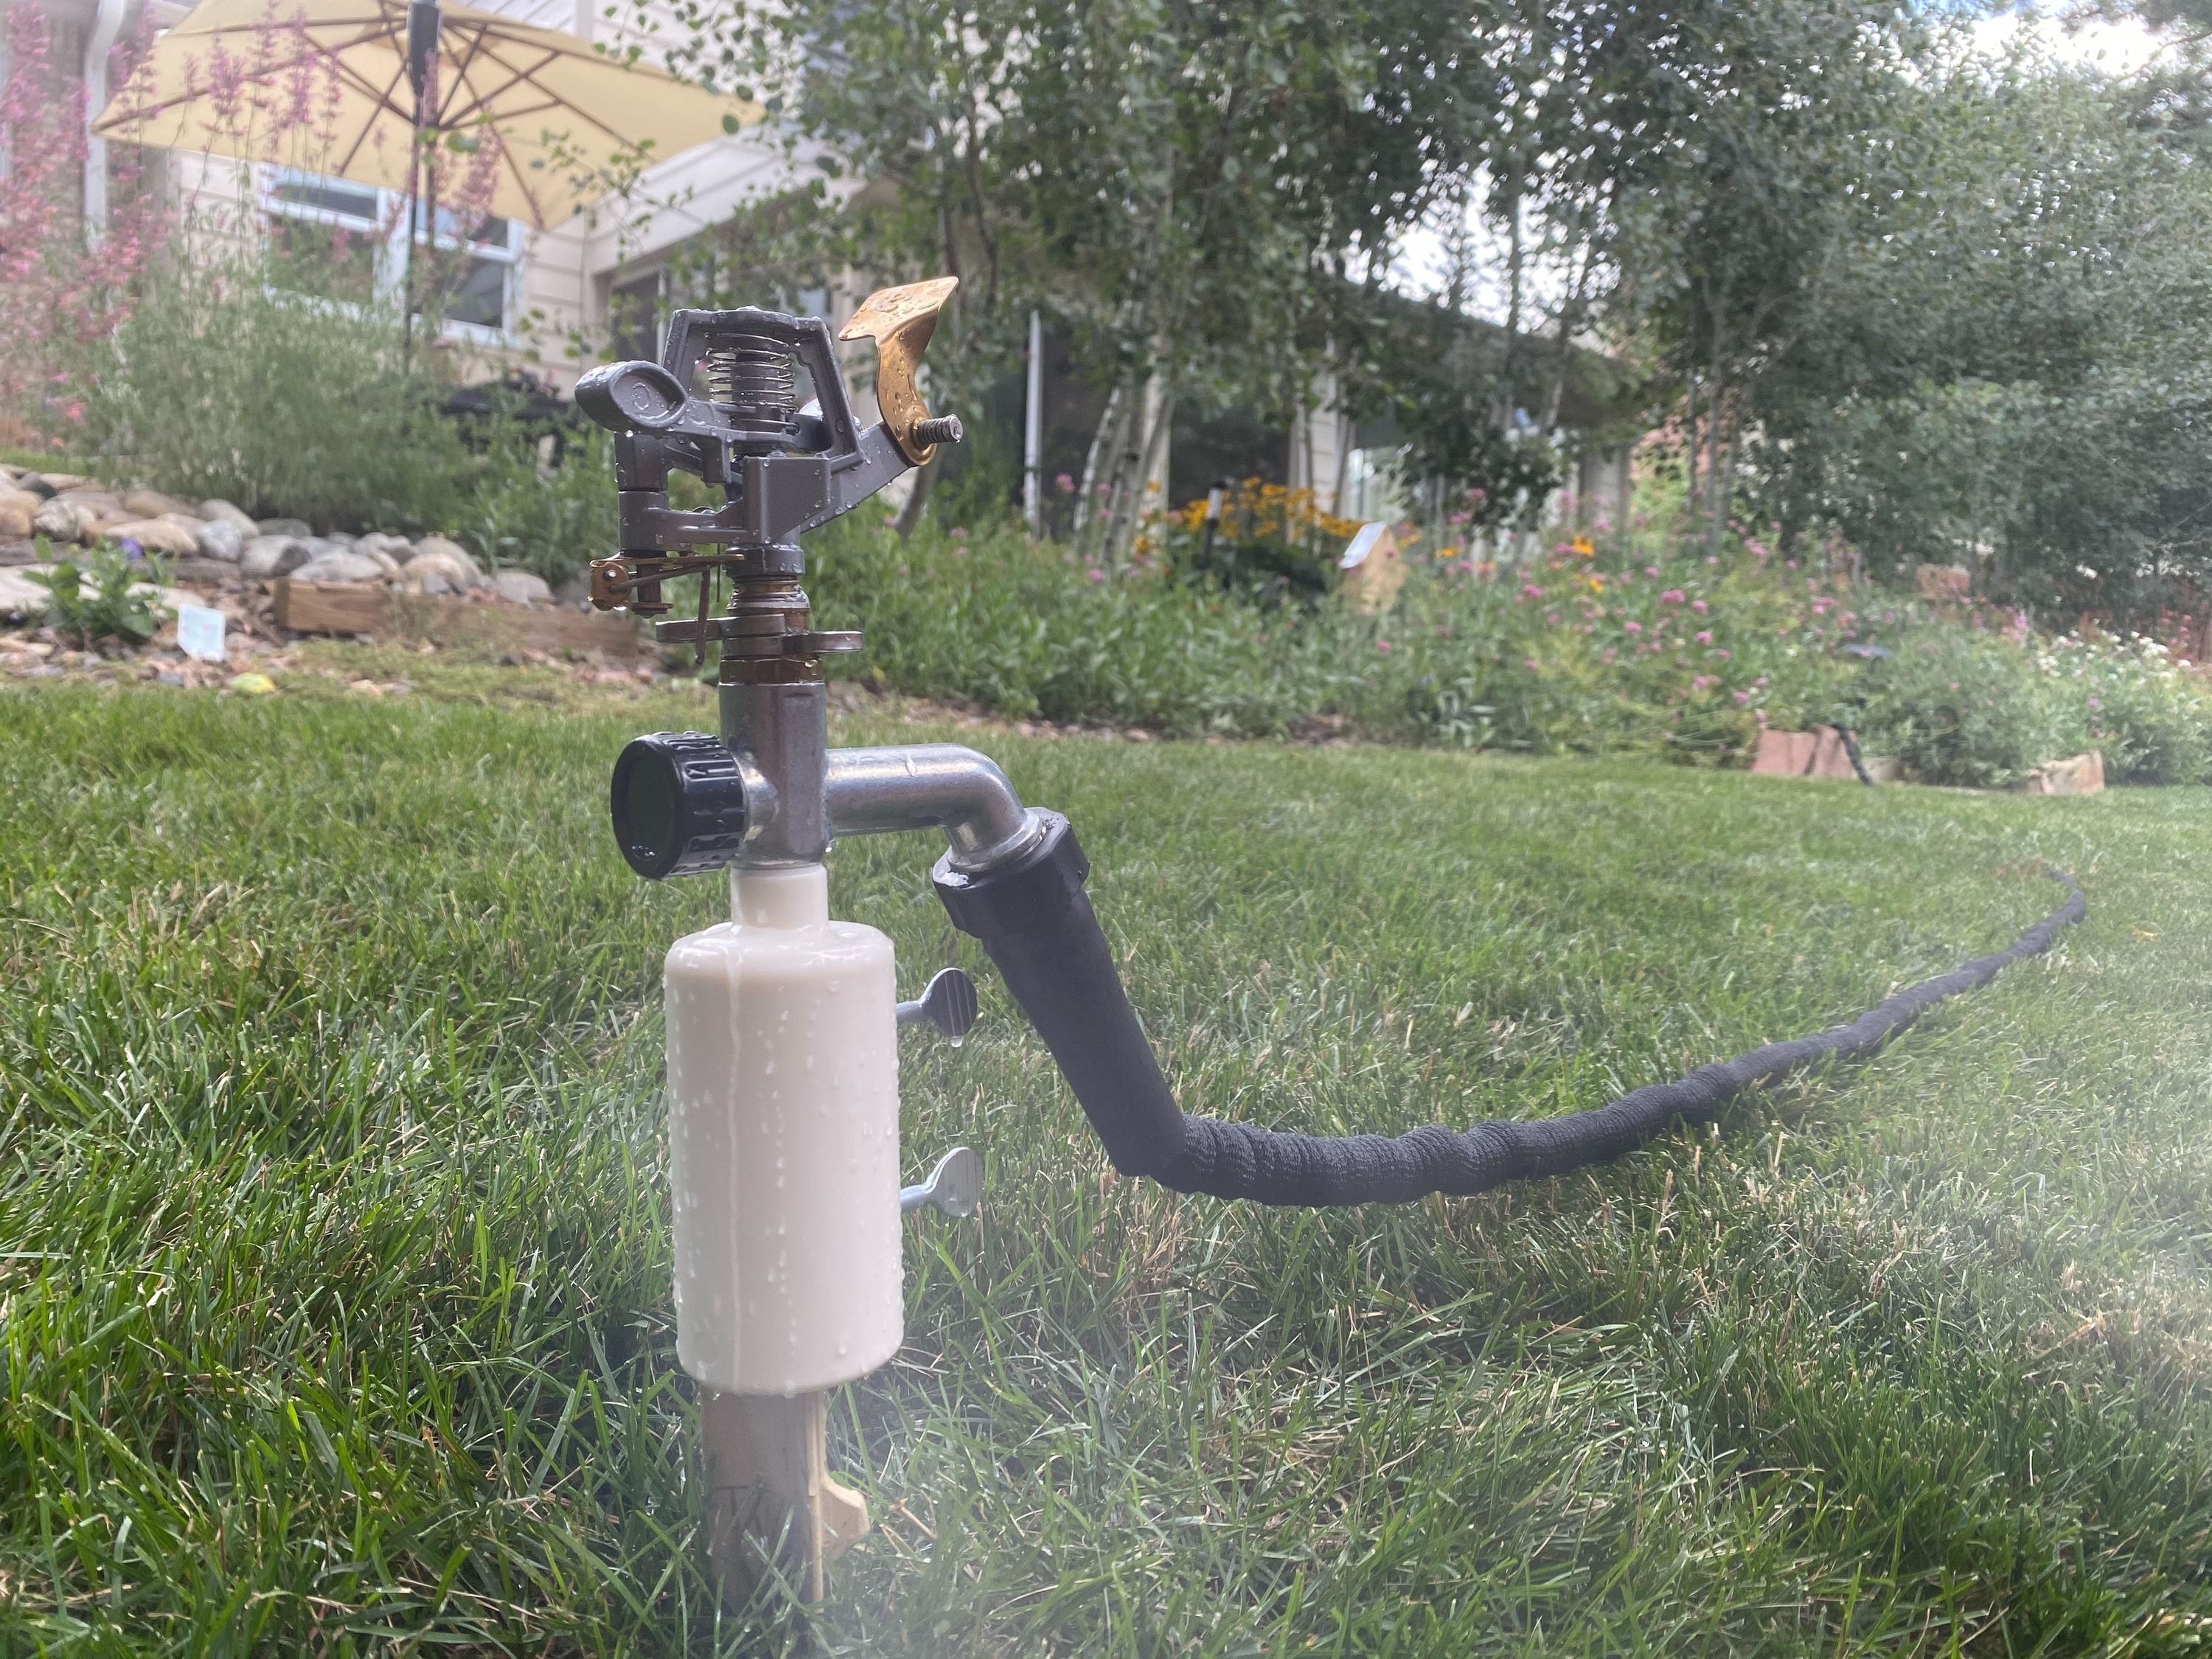 360 Degree Water Sprinkler Lawn Impulse Metal Spike Grass Hose Garden R7T5 